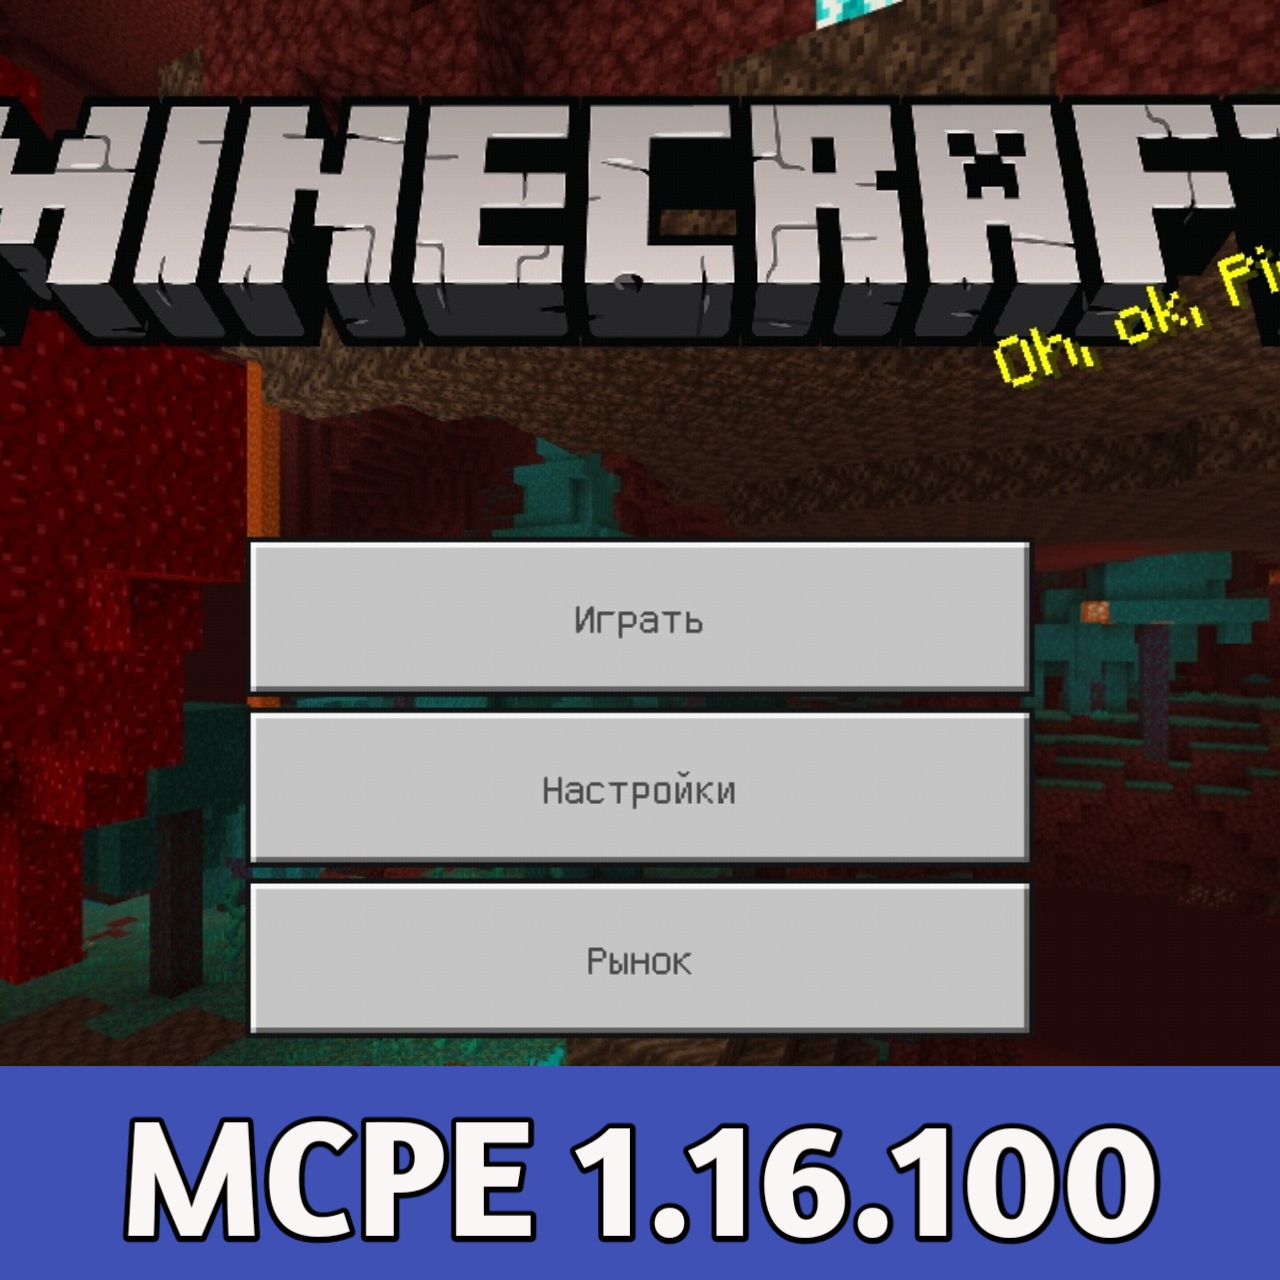 Download Minecraft PE 1.16.100.55 apk free: Nether Update